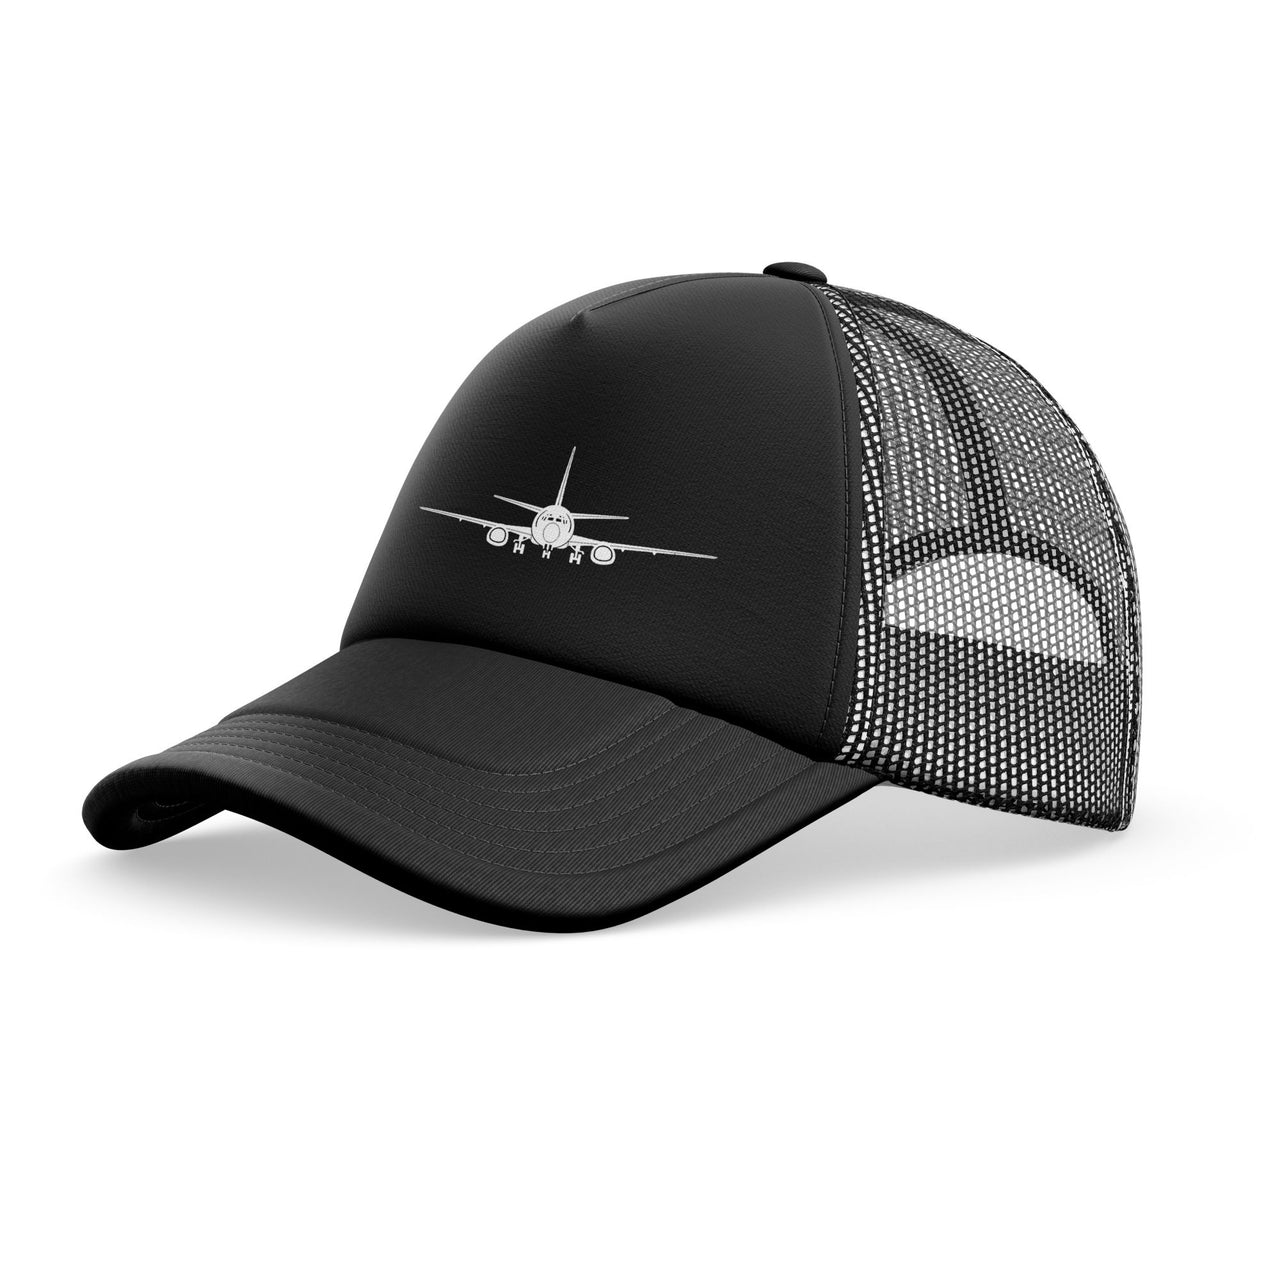 Boeing 737 Silhouette Designed Trucker Caps & Hats